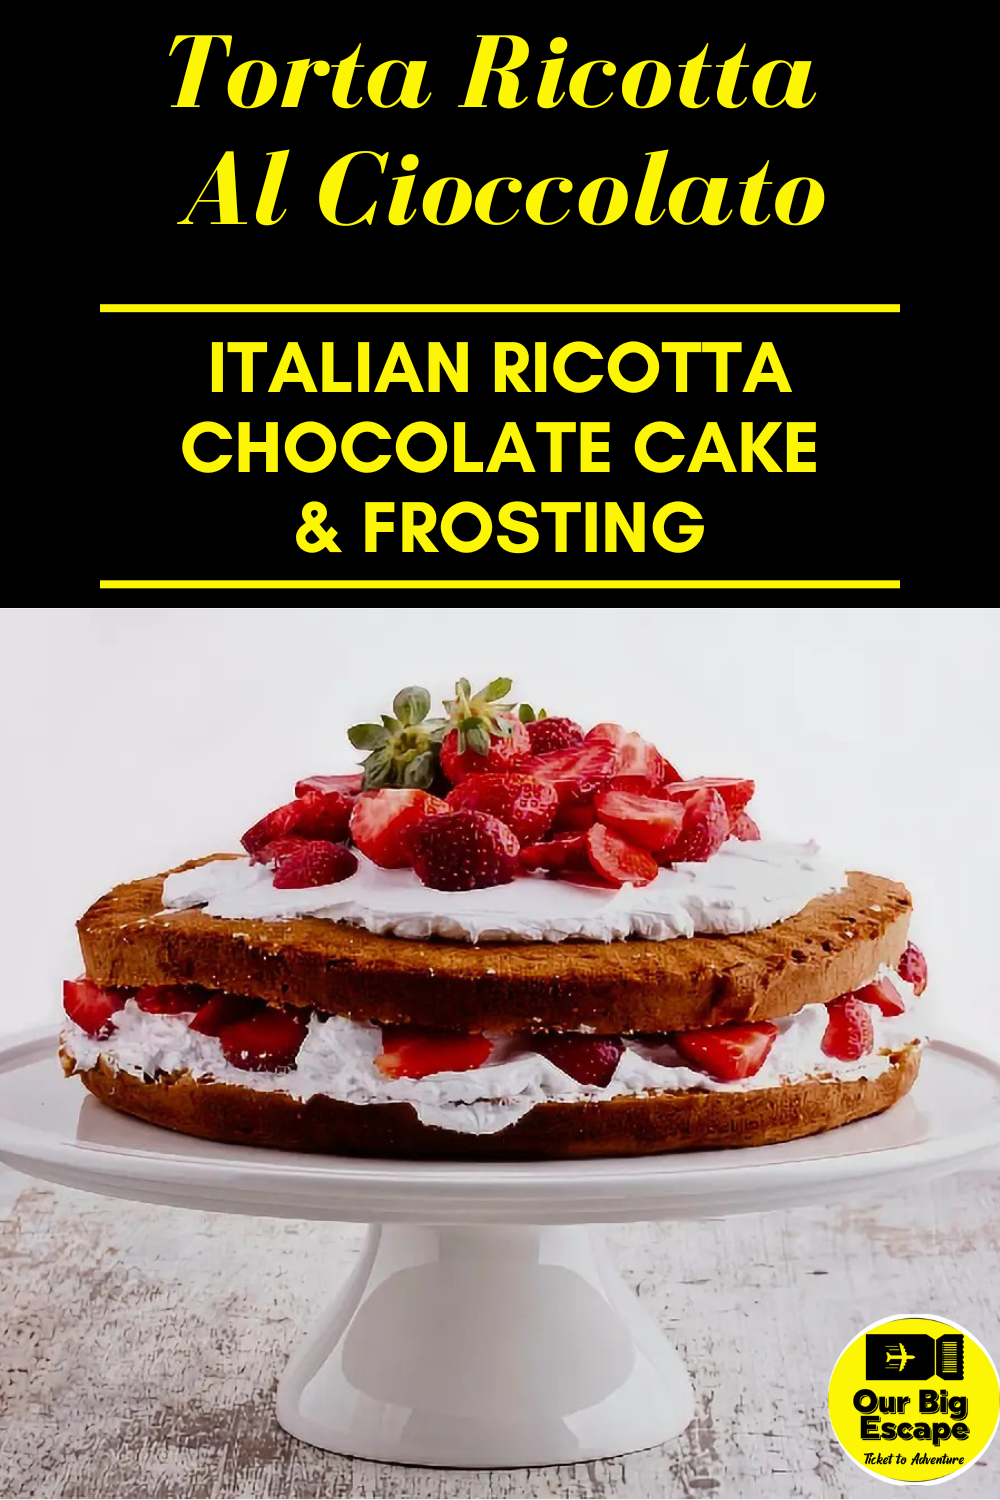 Torta Ricotta Al Cioccolato (Italian Ricotta Chocolate Cake & Frosting)